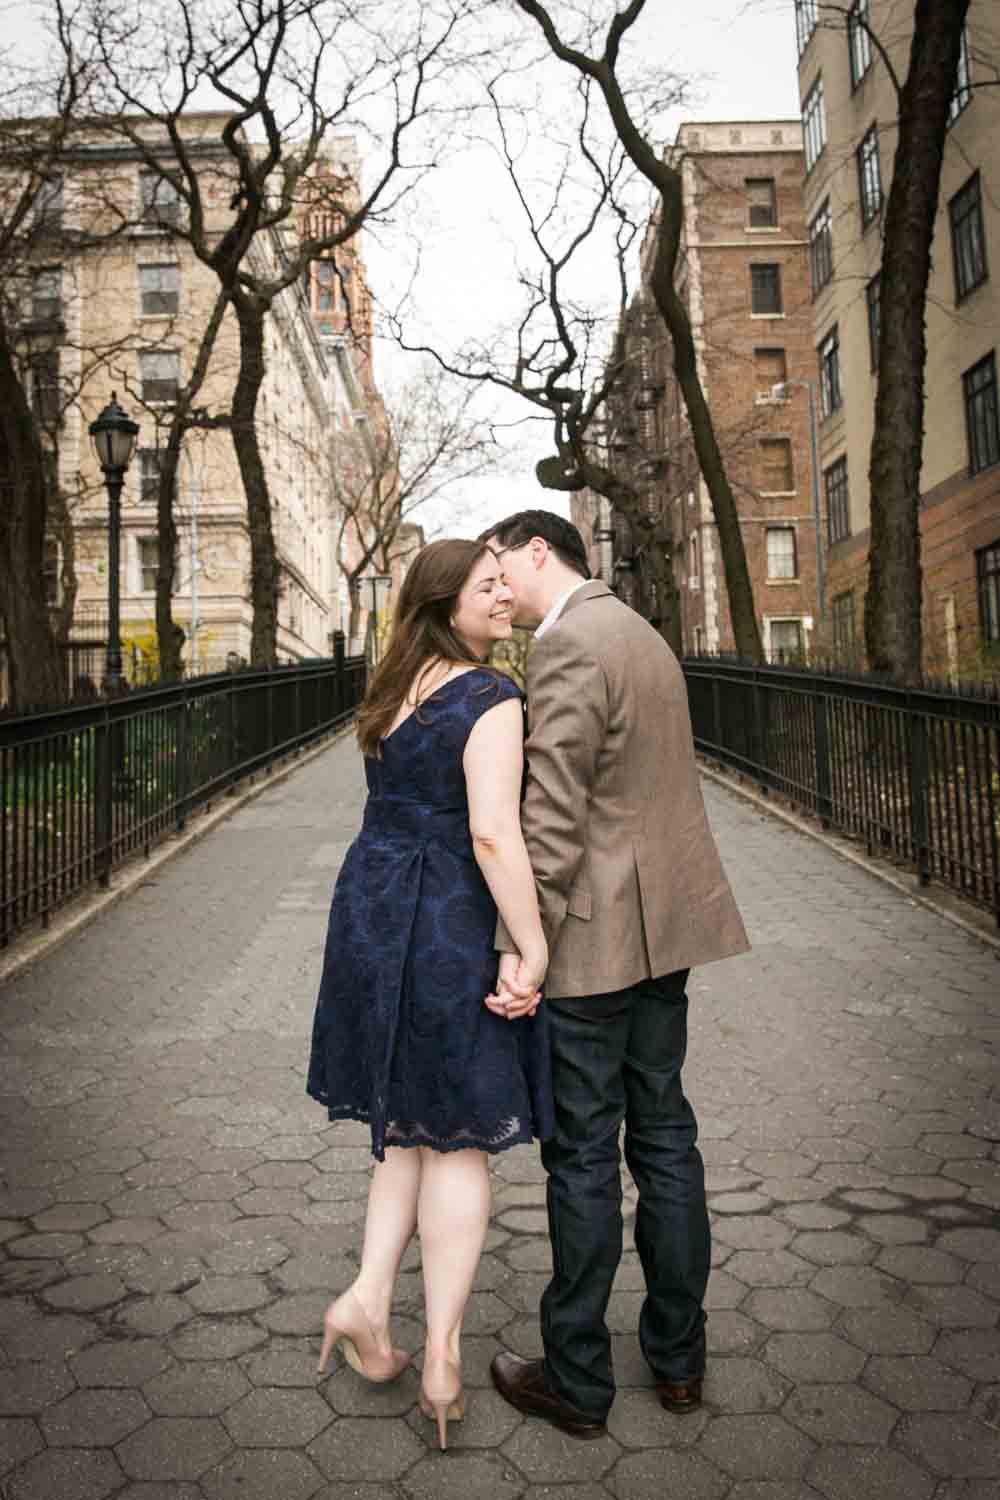 Couple walking down sidewalk and man kissing woman on cheek